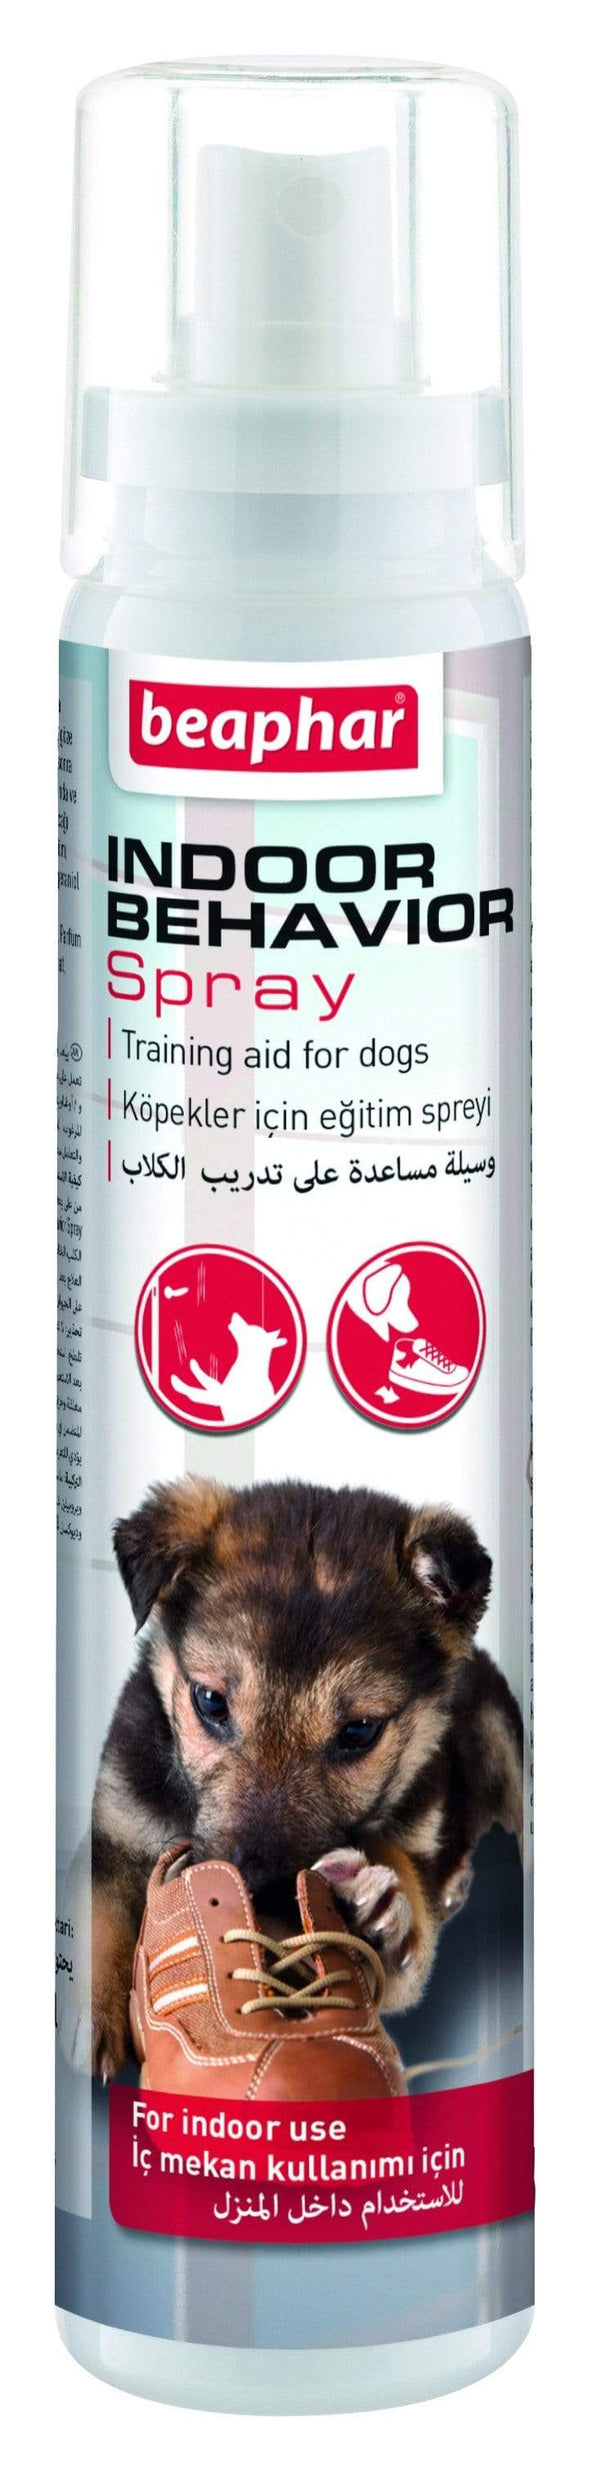 Indoor Behavior Spray - Dog Training Aid Spray - Beaphar - PetStore.ae